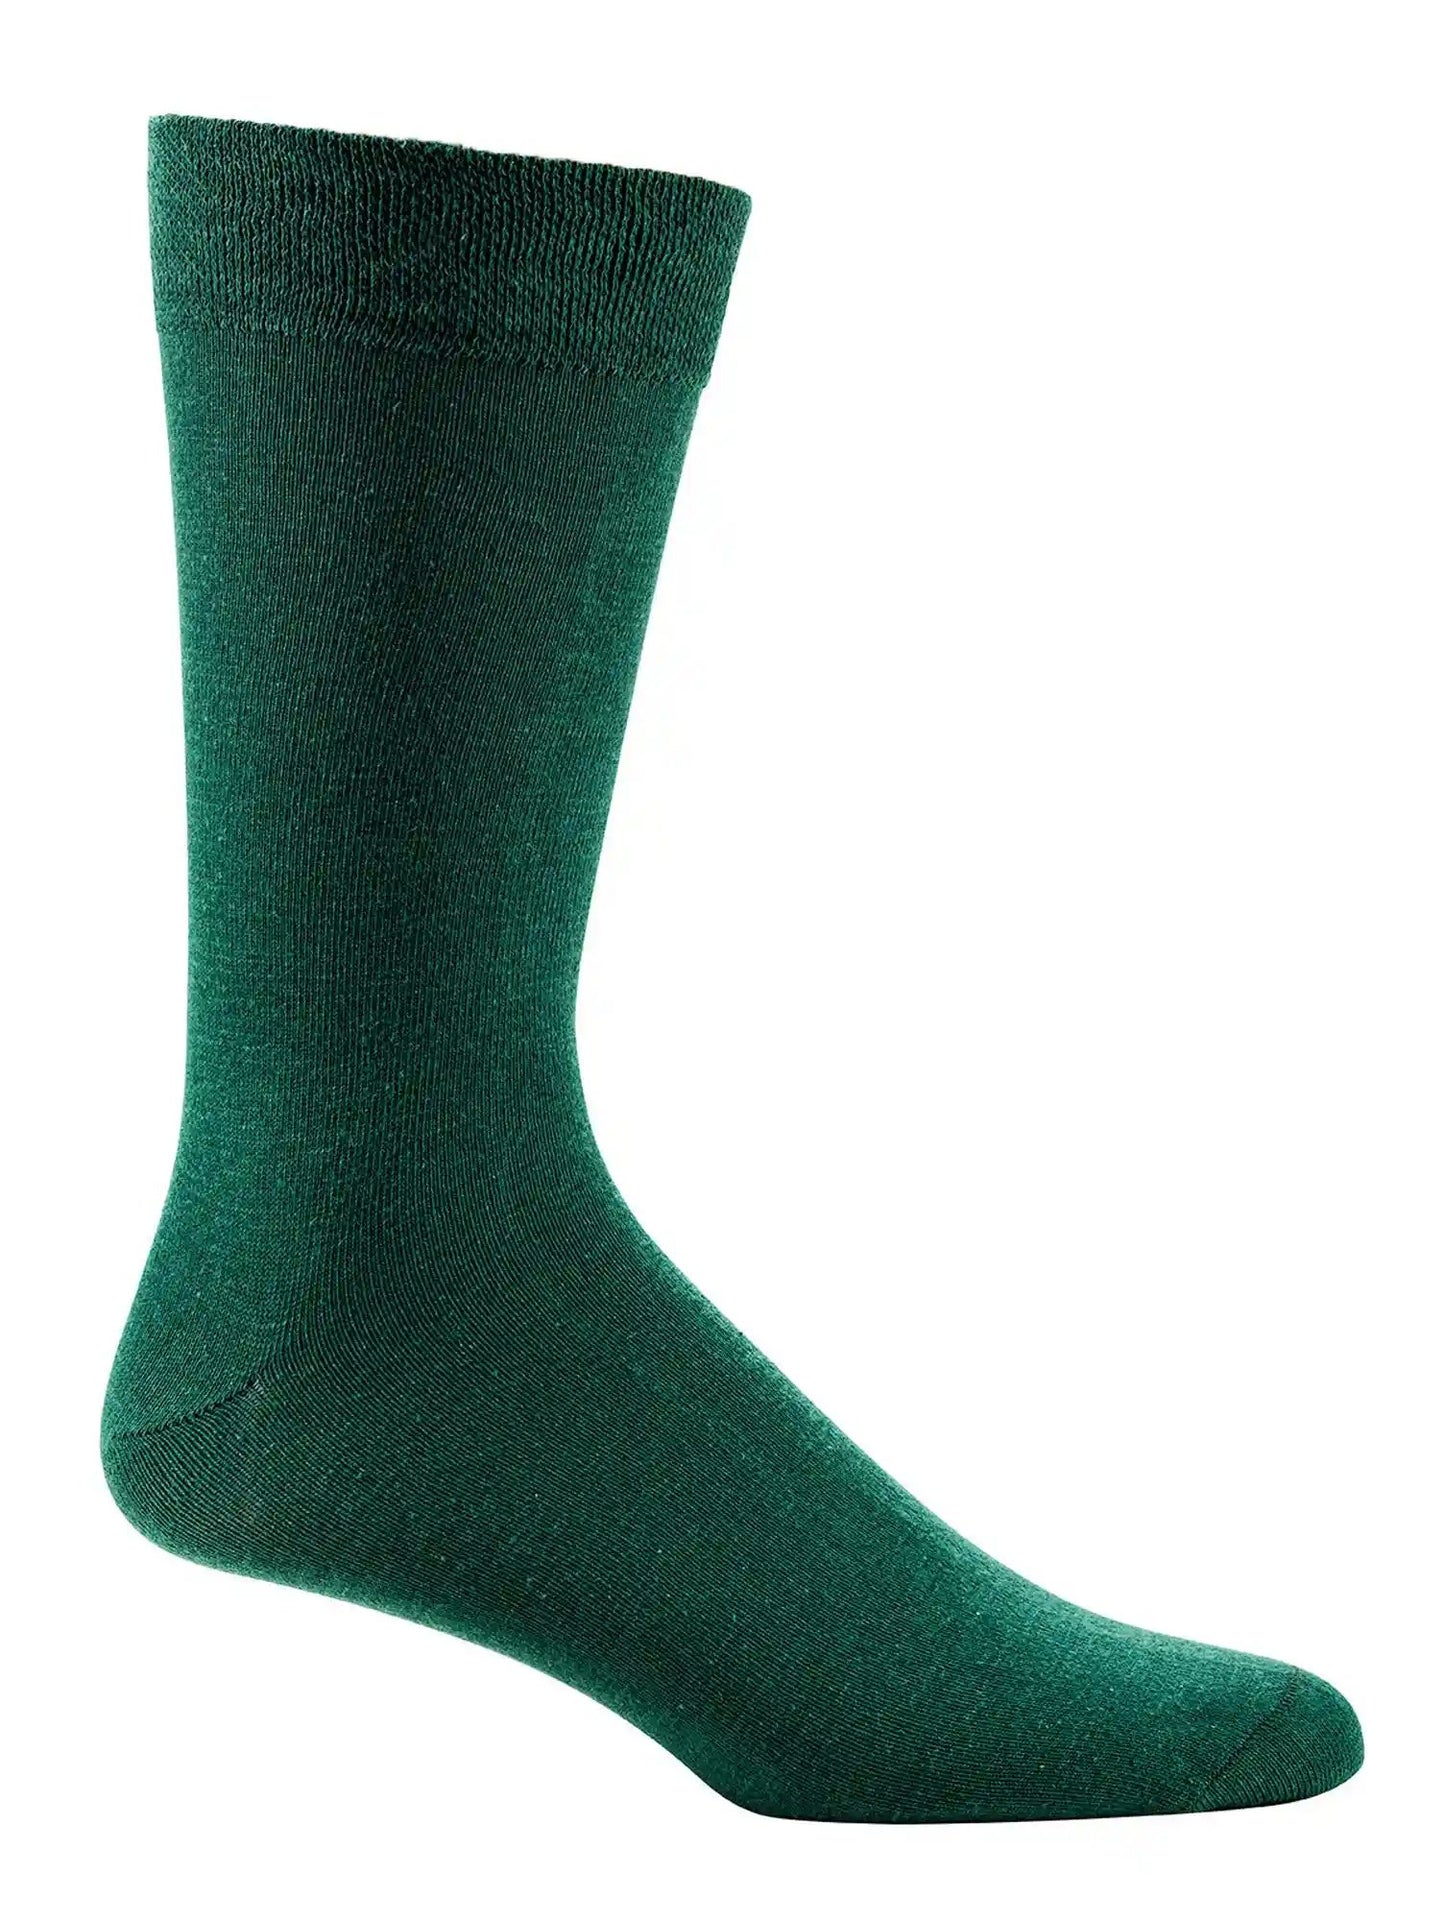 2 oder 4 Paar Herren Anzug Business Socken bunt Color Your Life ohne Gummi Größe 39-50